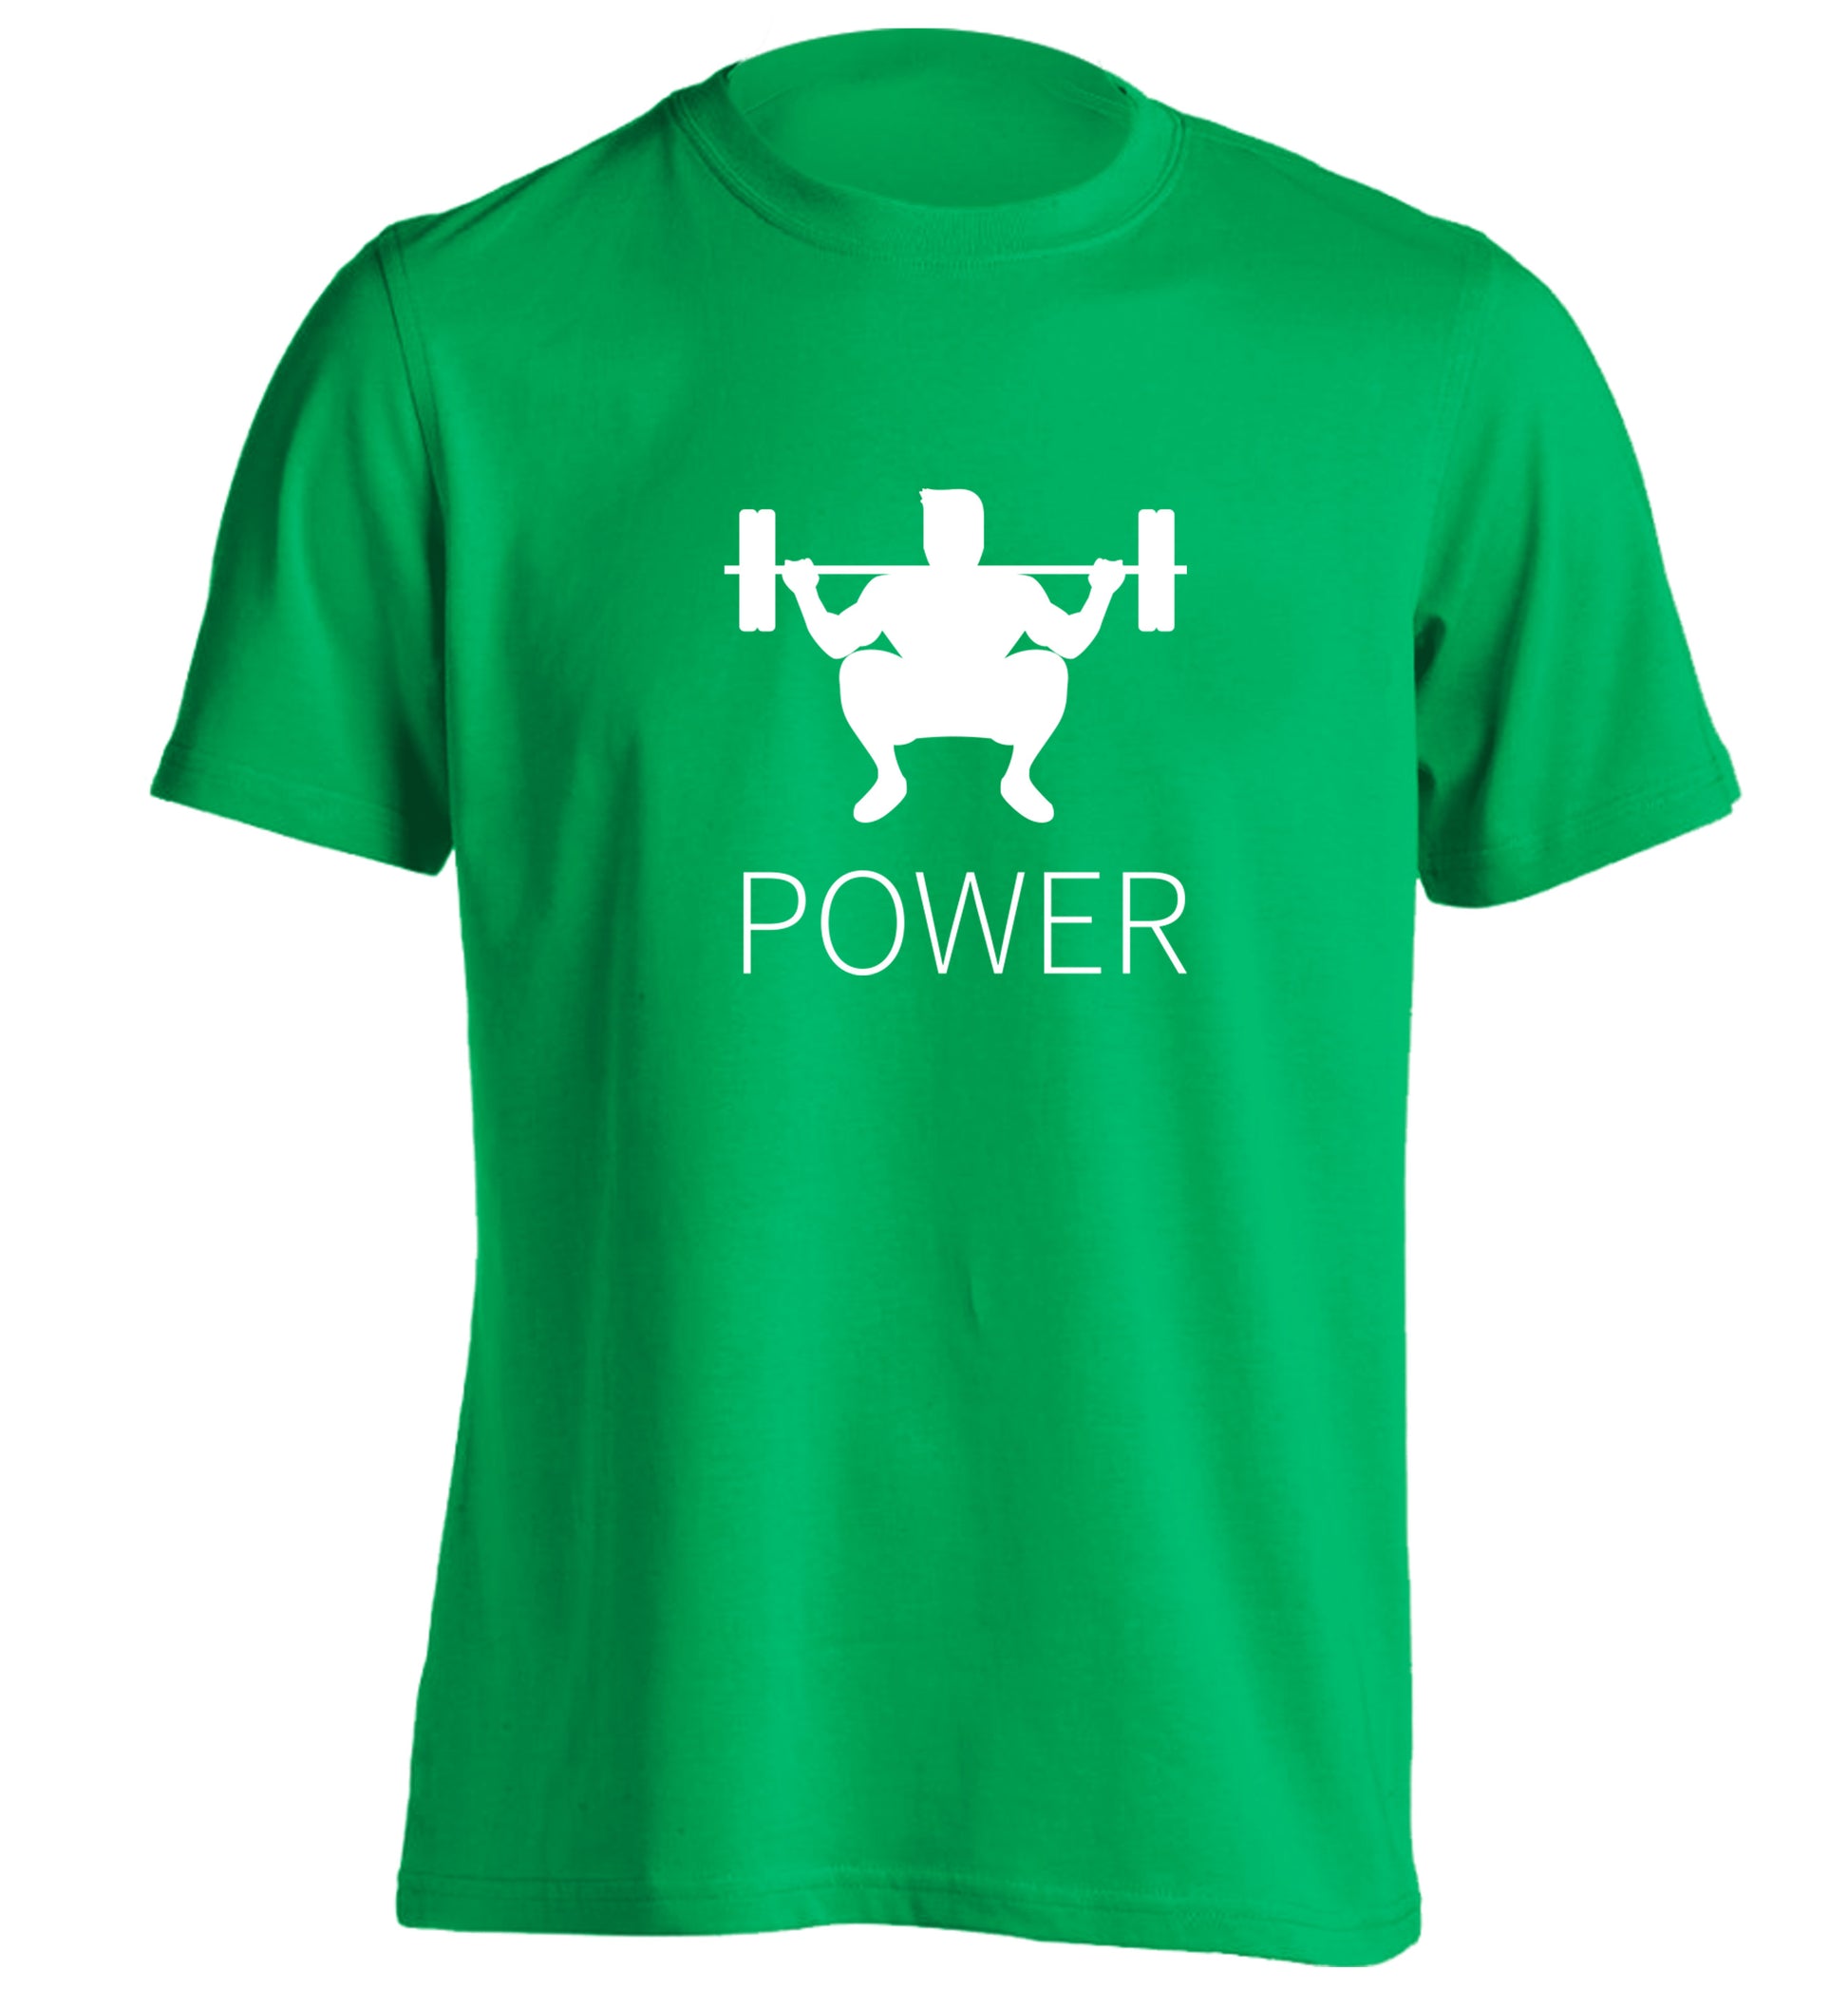 Lift power adults unisex green Tshirt 2XL